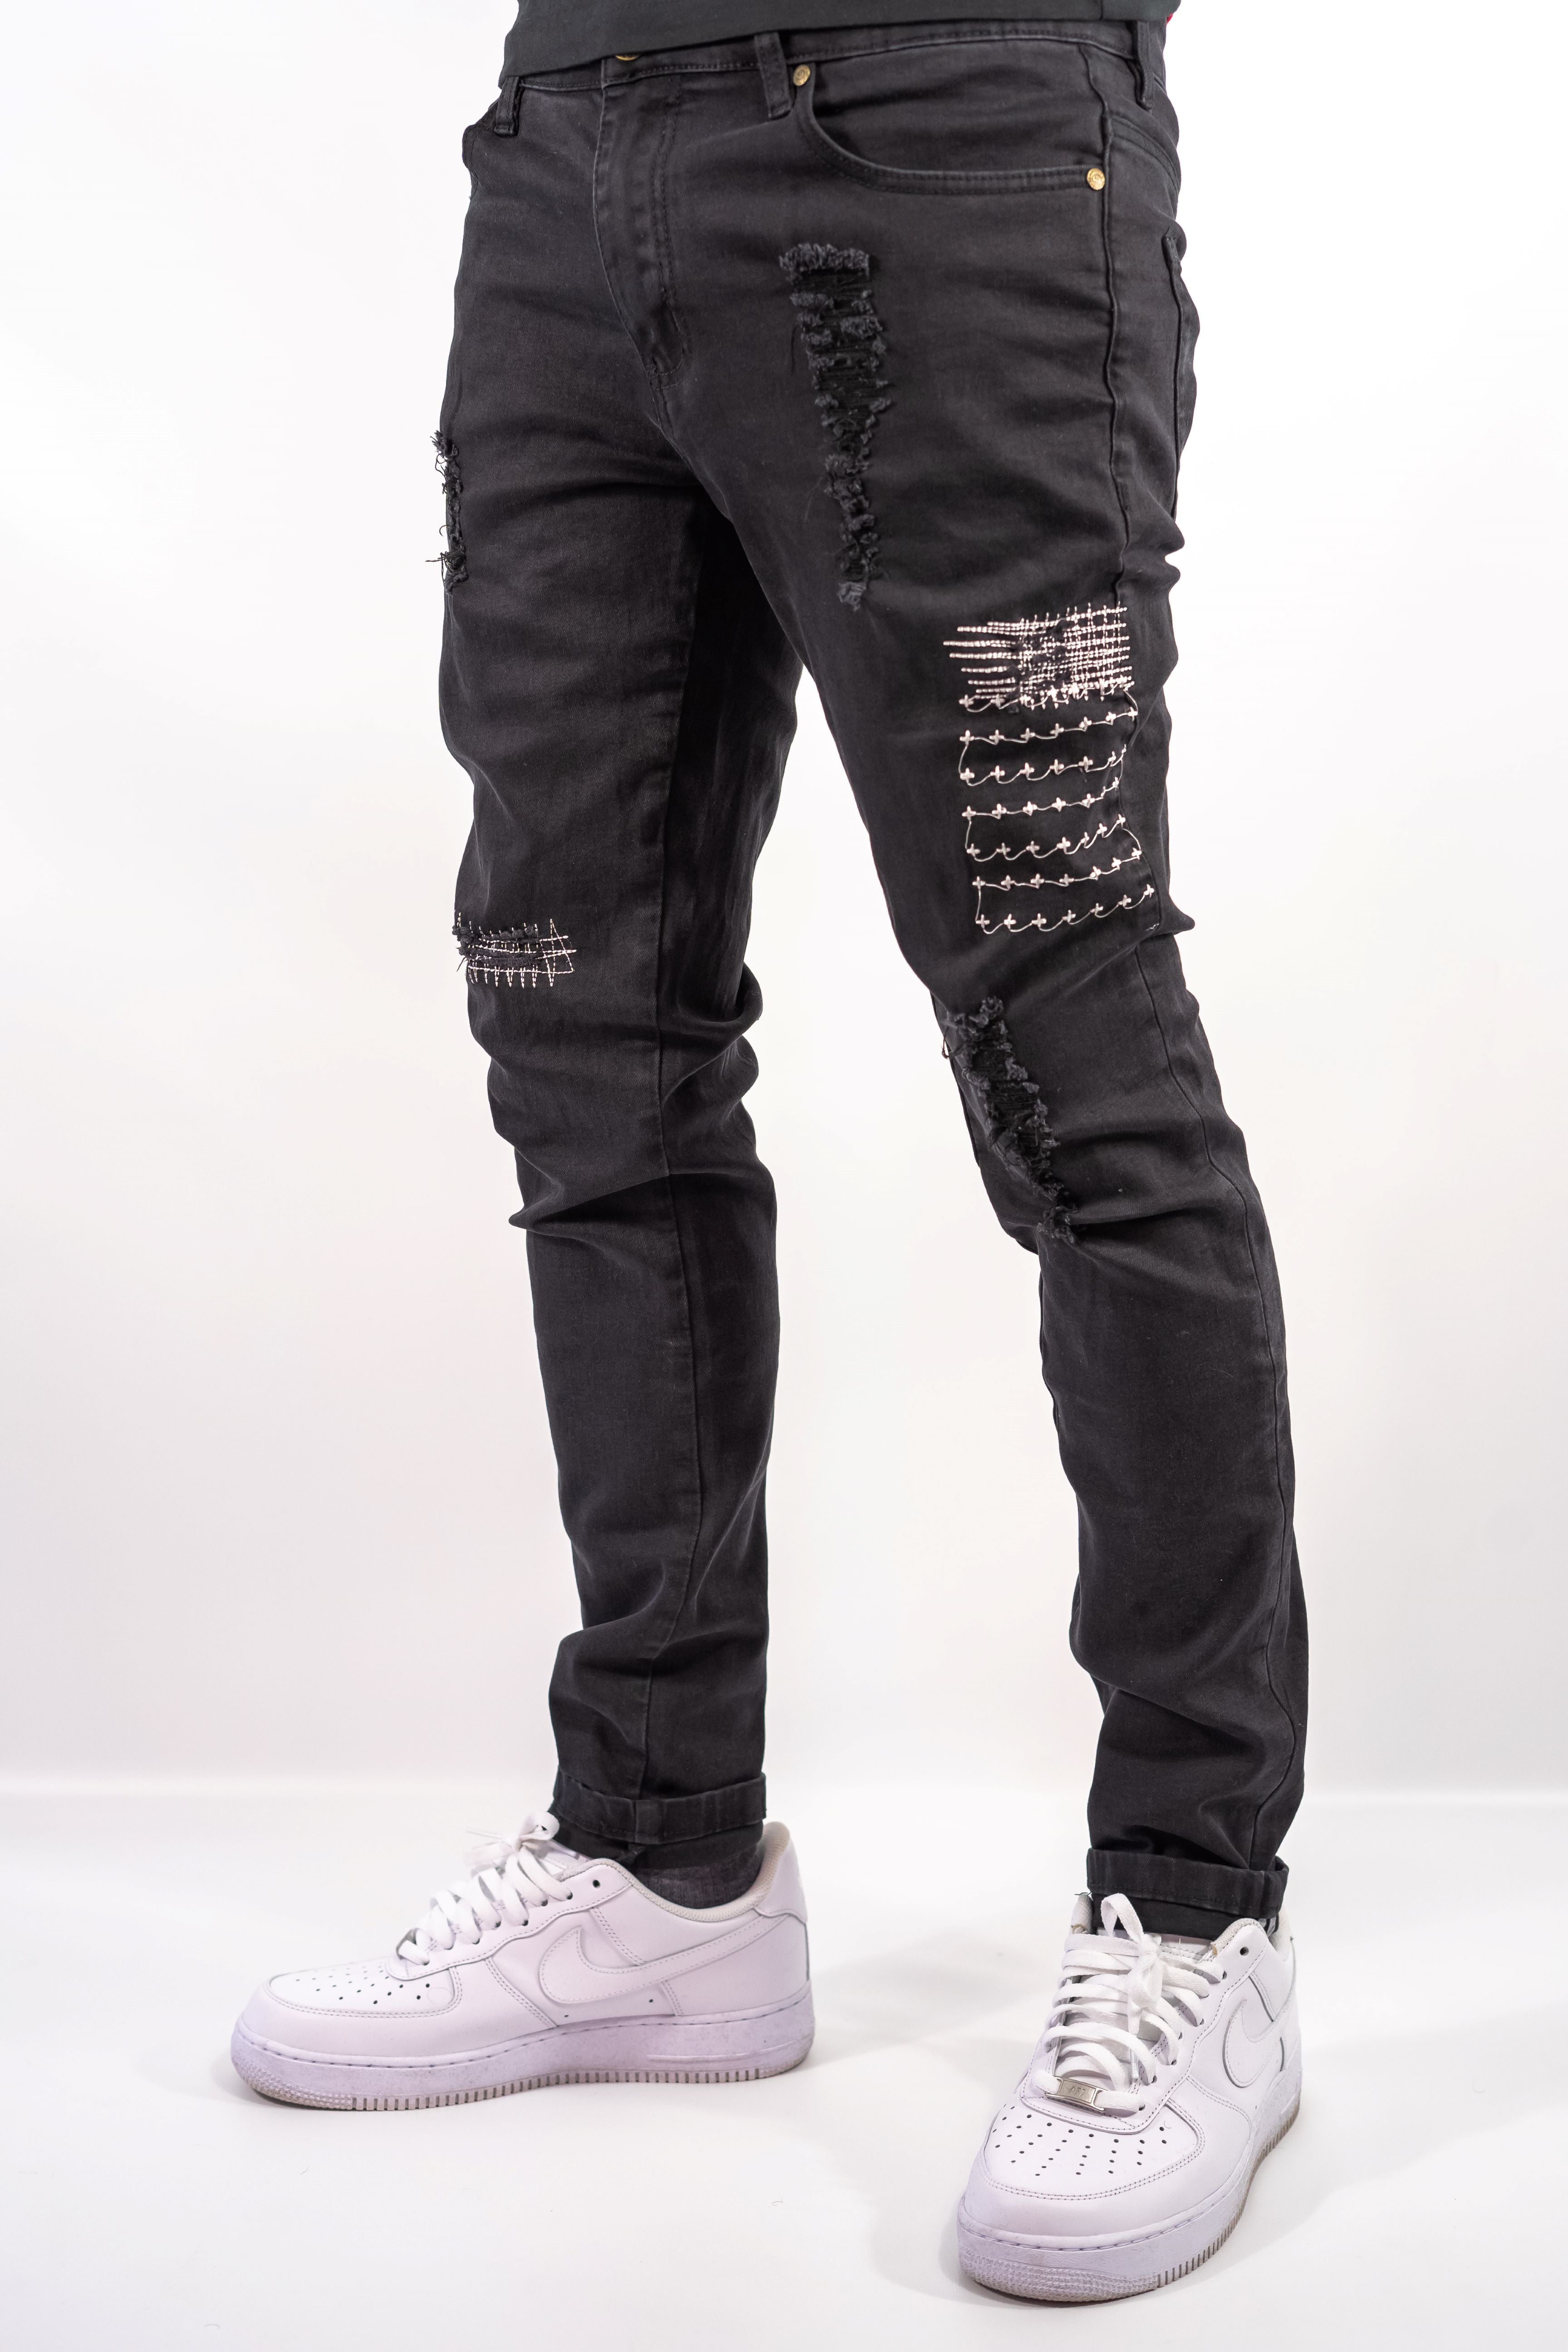 Stitched Denim Jeans – Ubuntu Revolution